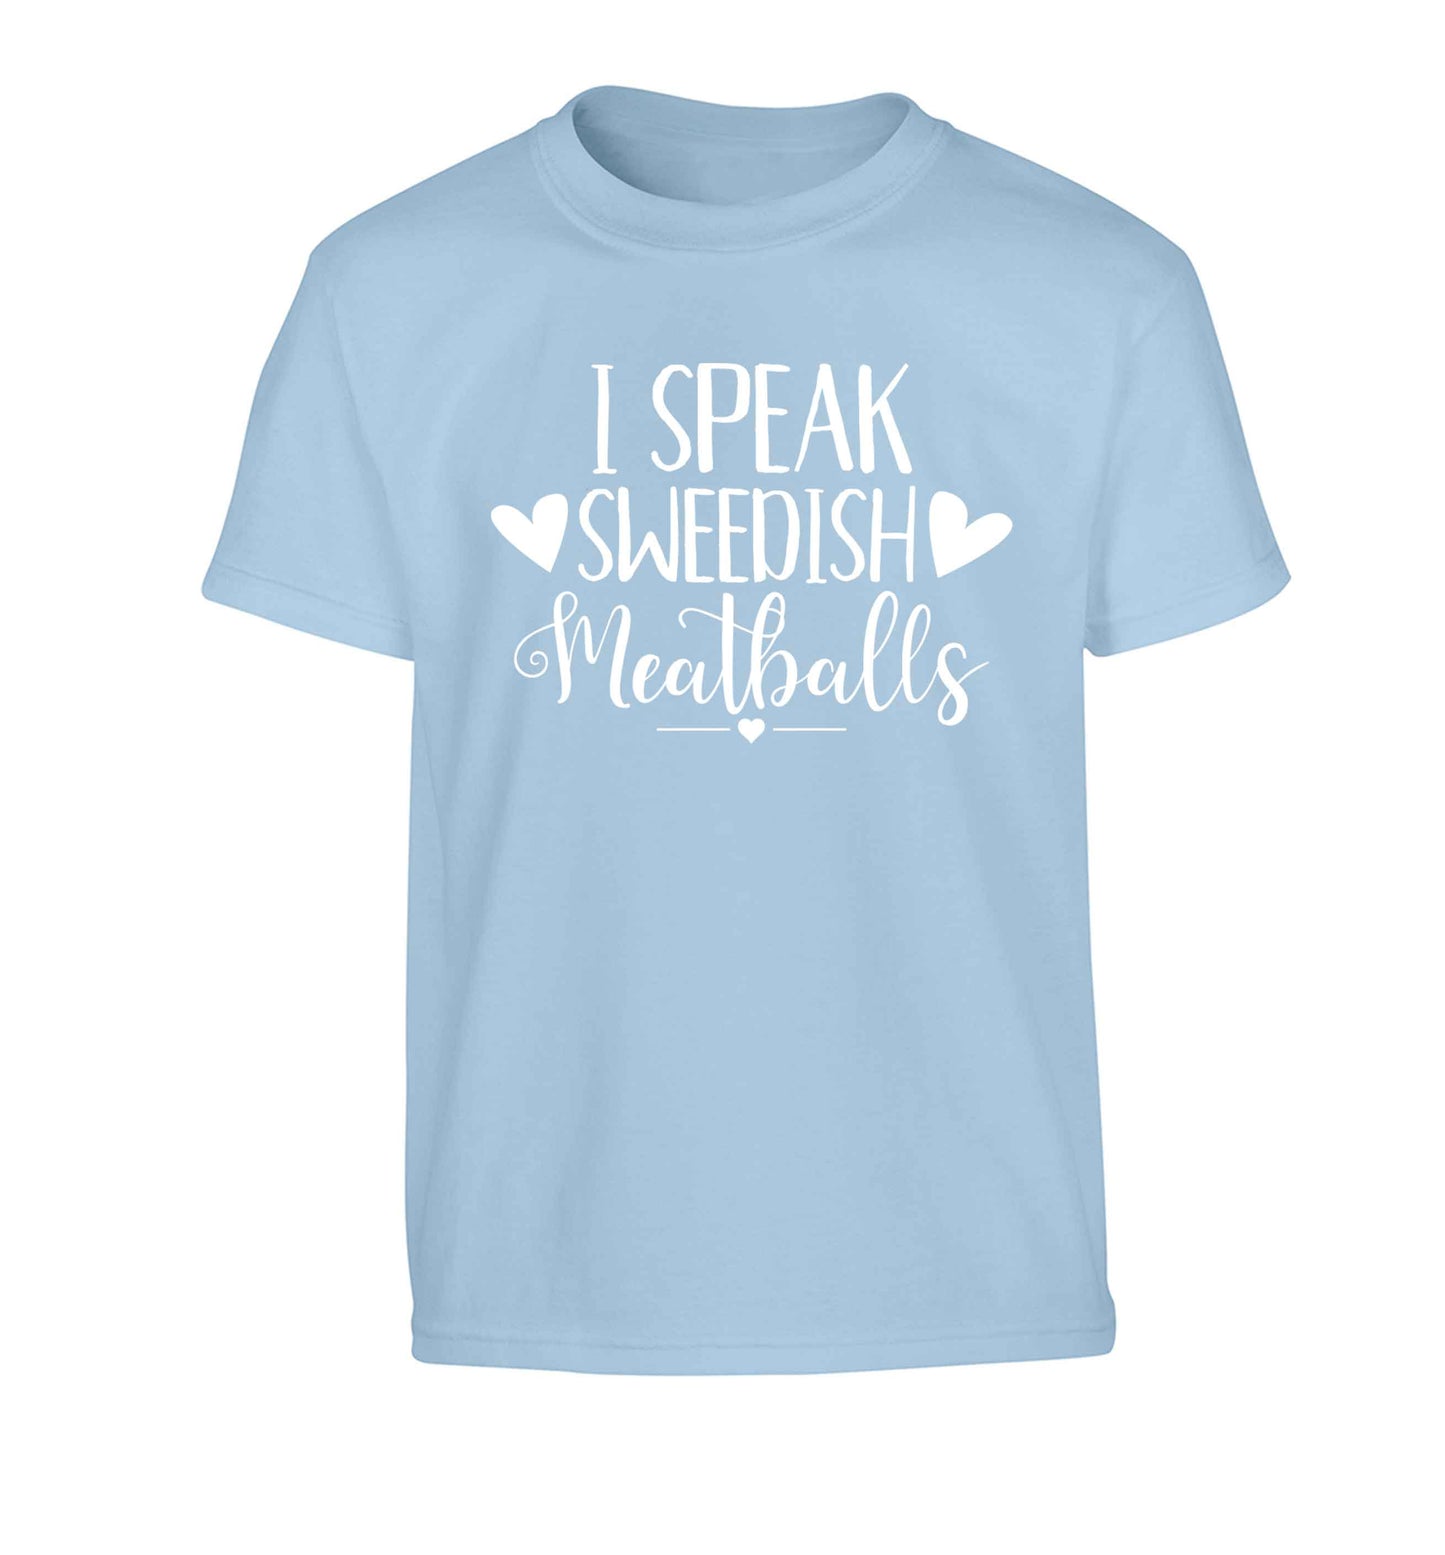 I speak sweedish...meatballs Children's light blue Tshirt 12-13 Years